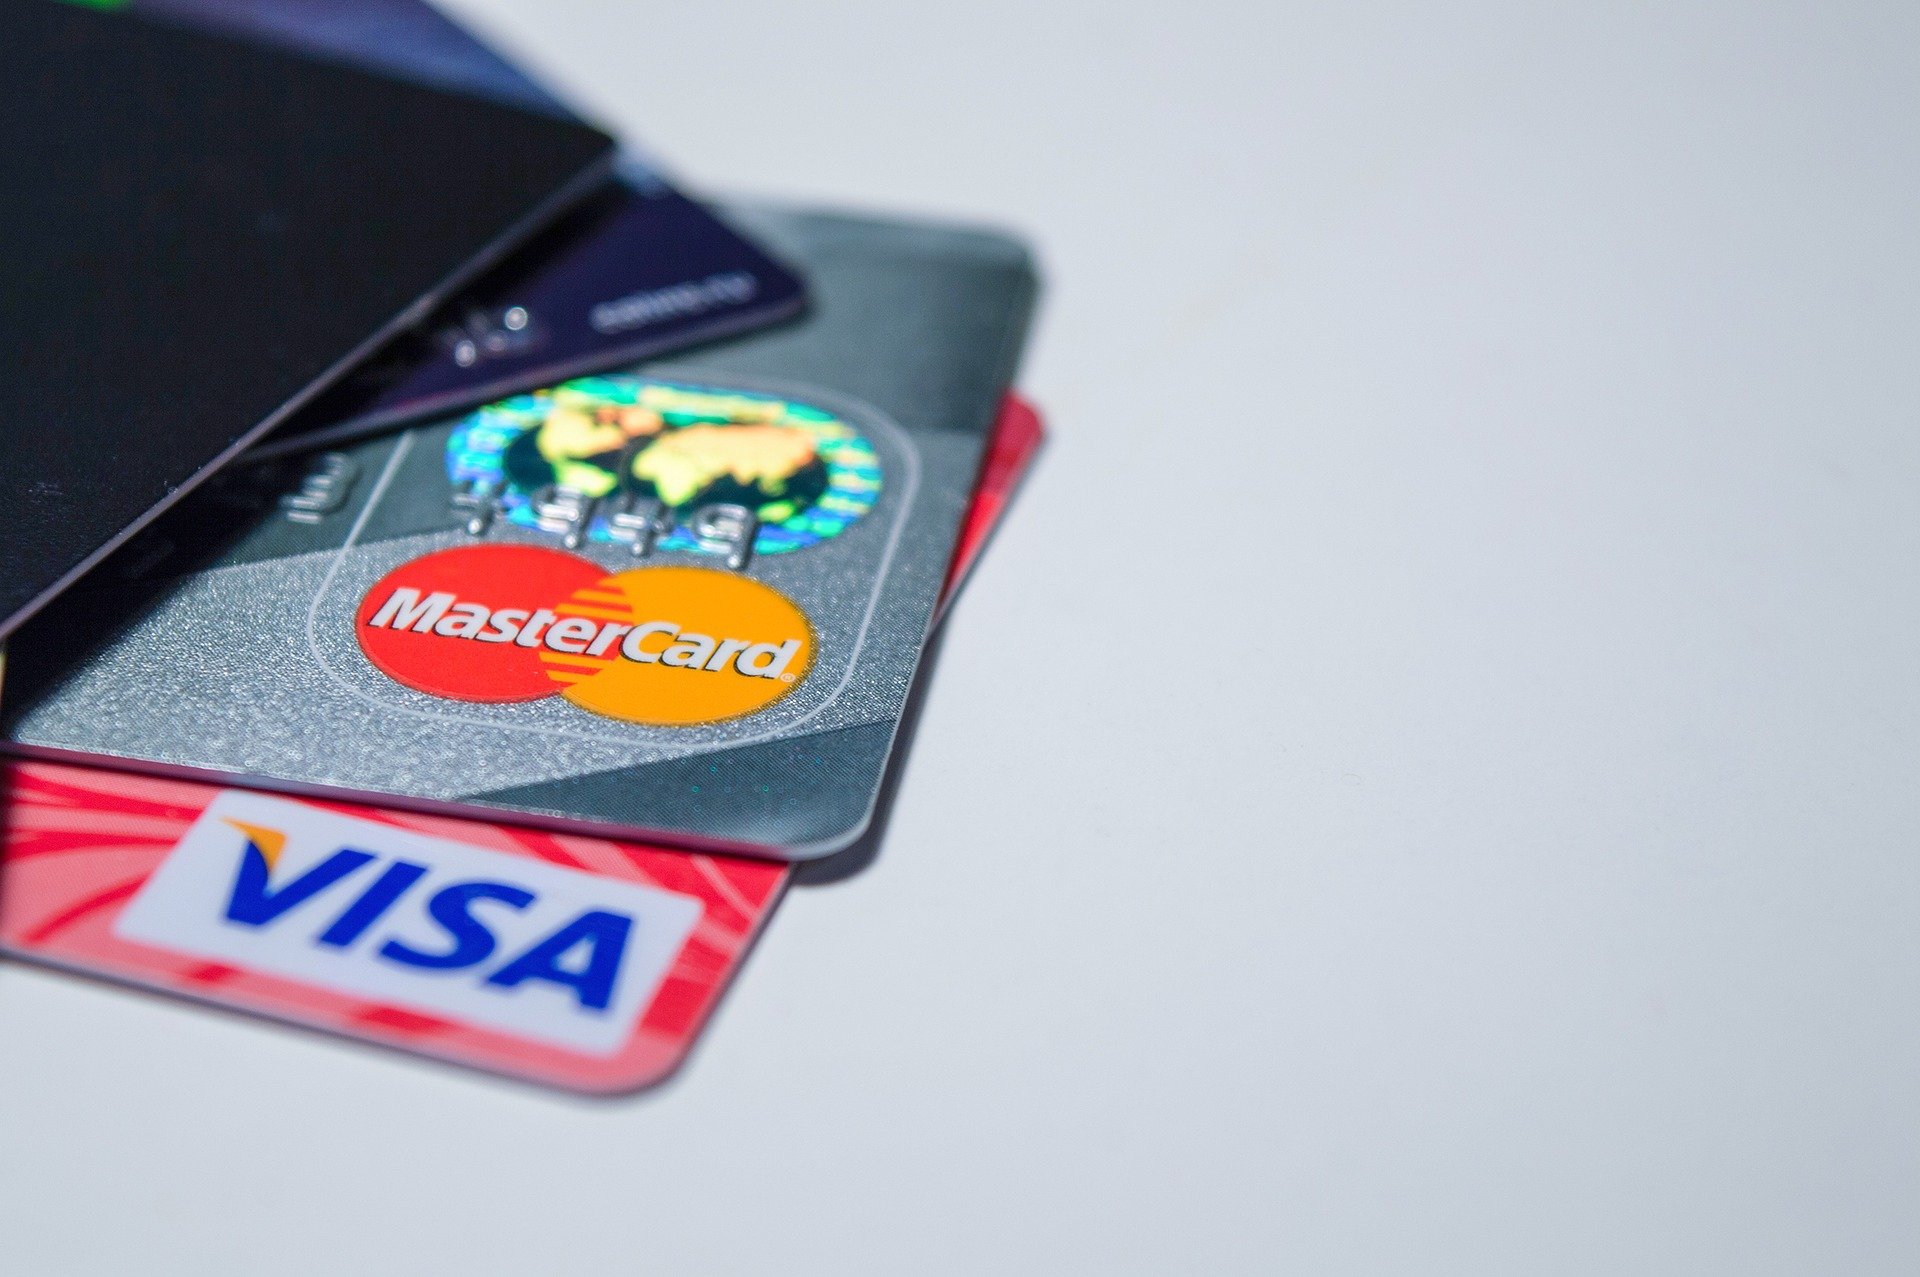 В Wildberries появилась комиссия за оплату товара картами Visa и Mastercard